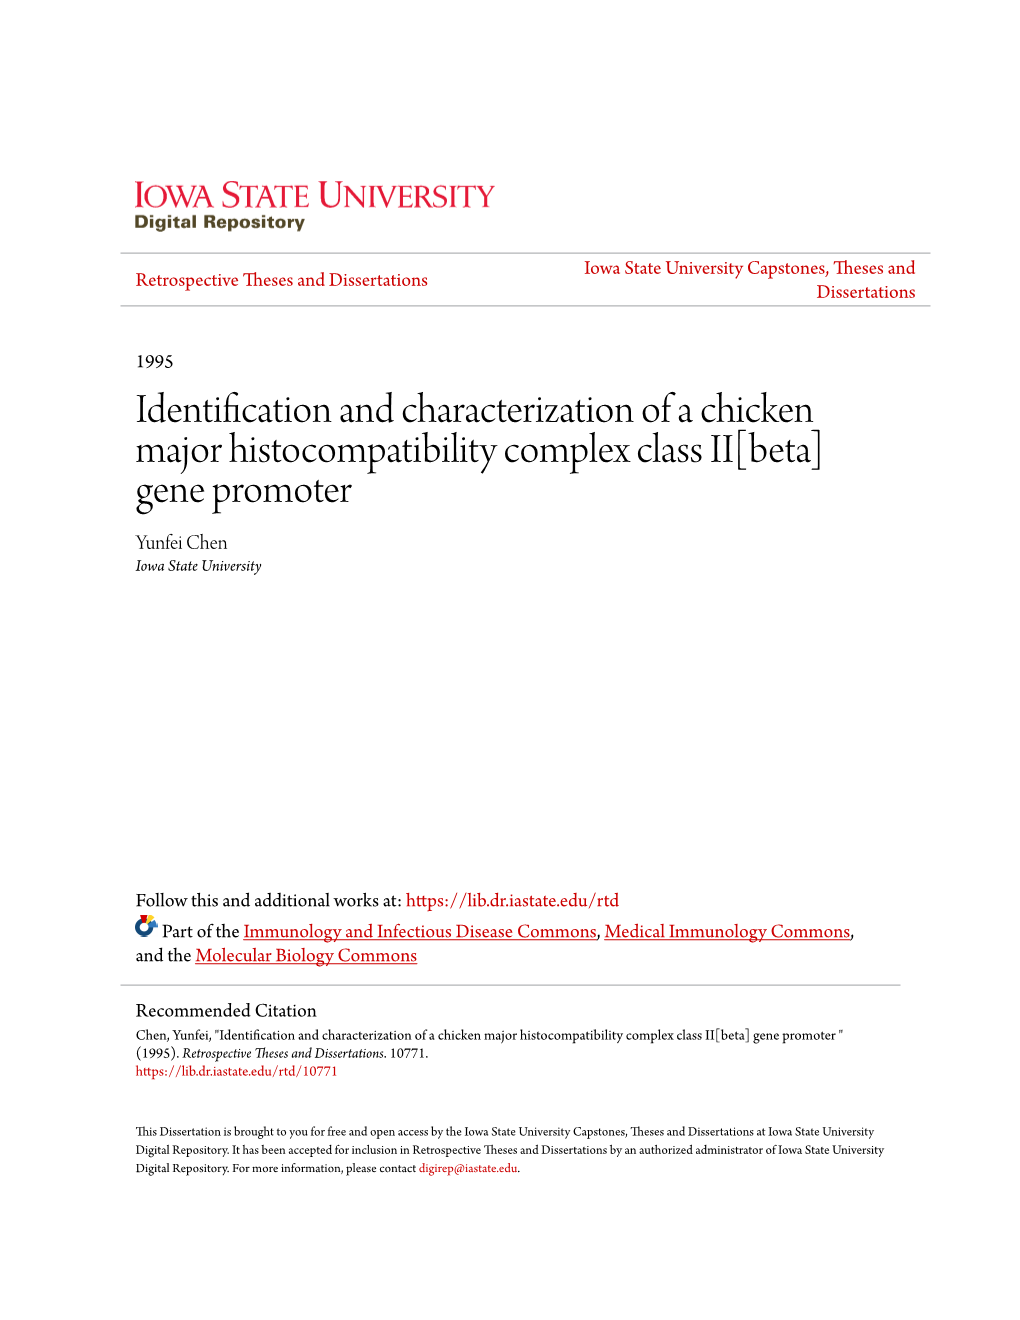 Identification and Characterization of a Chicken Major Histocompatibility Complex Class II[Beta] Gene Promoter Yunfei Chen Iowa State University